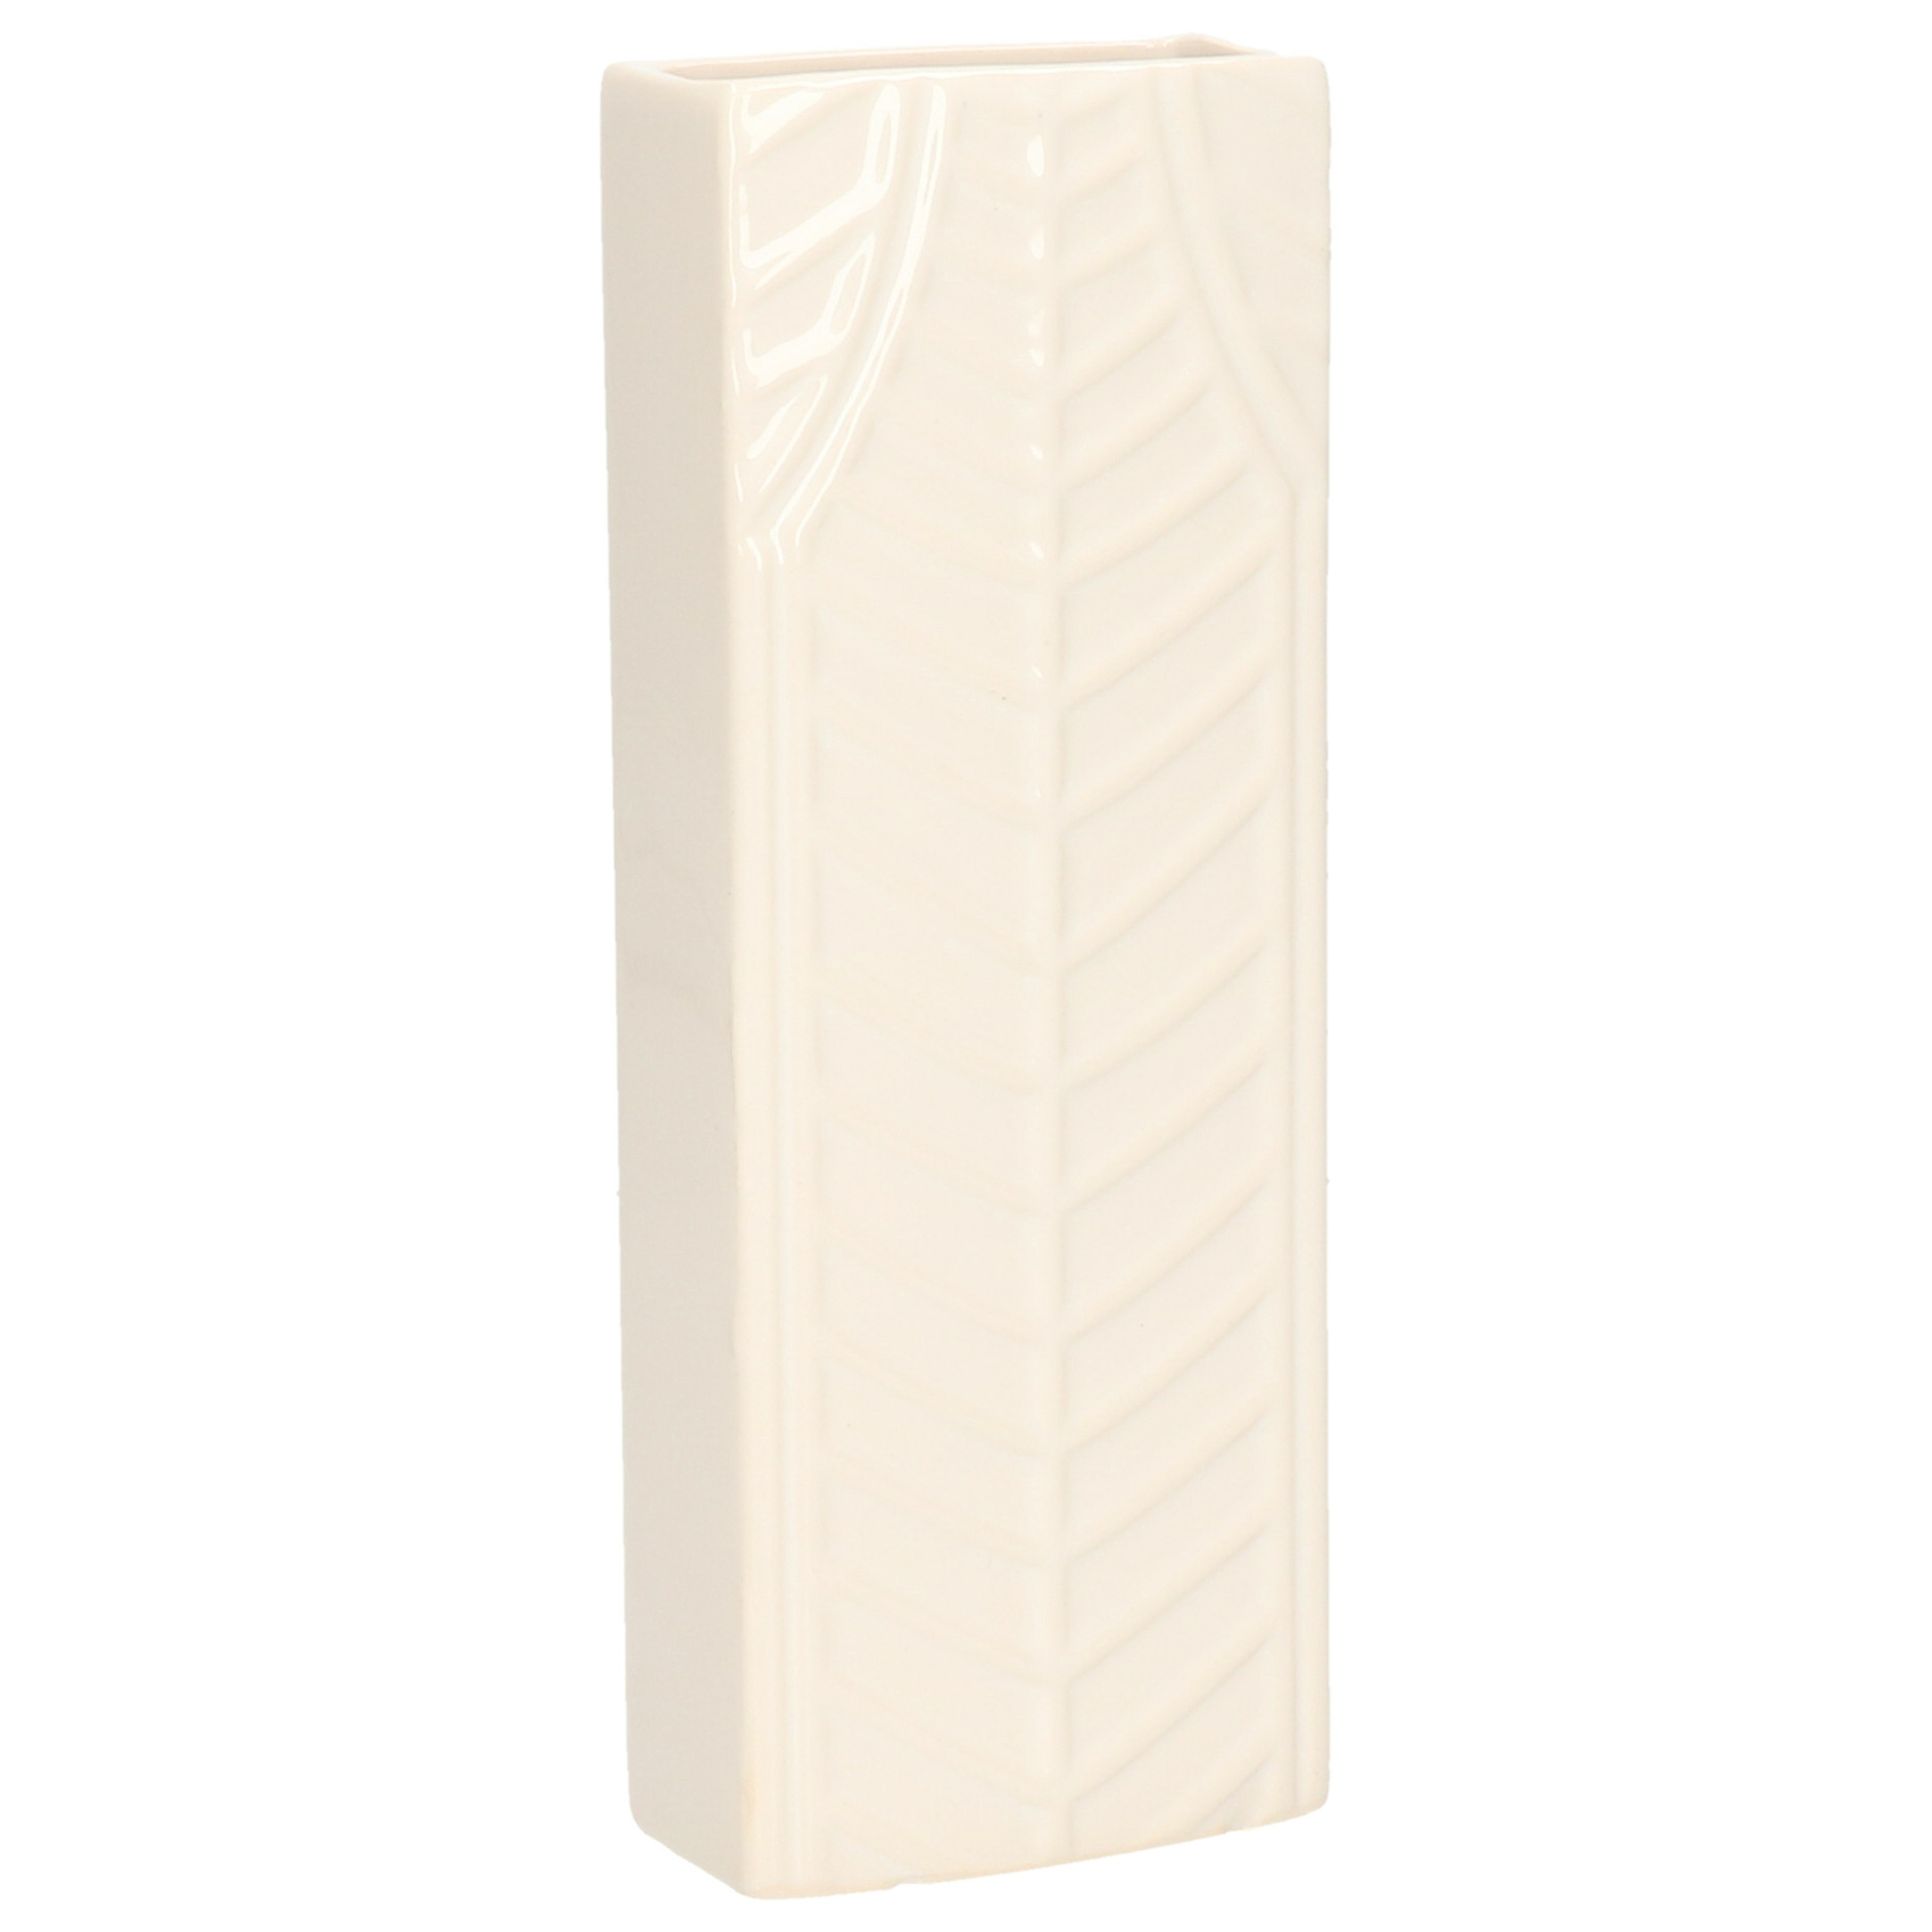 Waterverdamper creme wit keramiek 400 ml radiatorbak luchtbevochtiger 7,4 x 18,6 cm